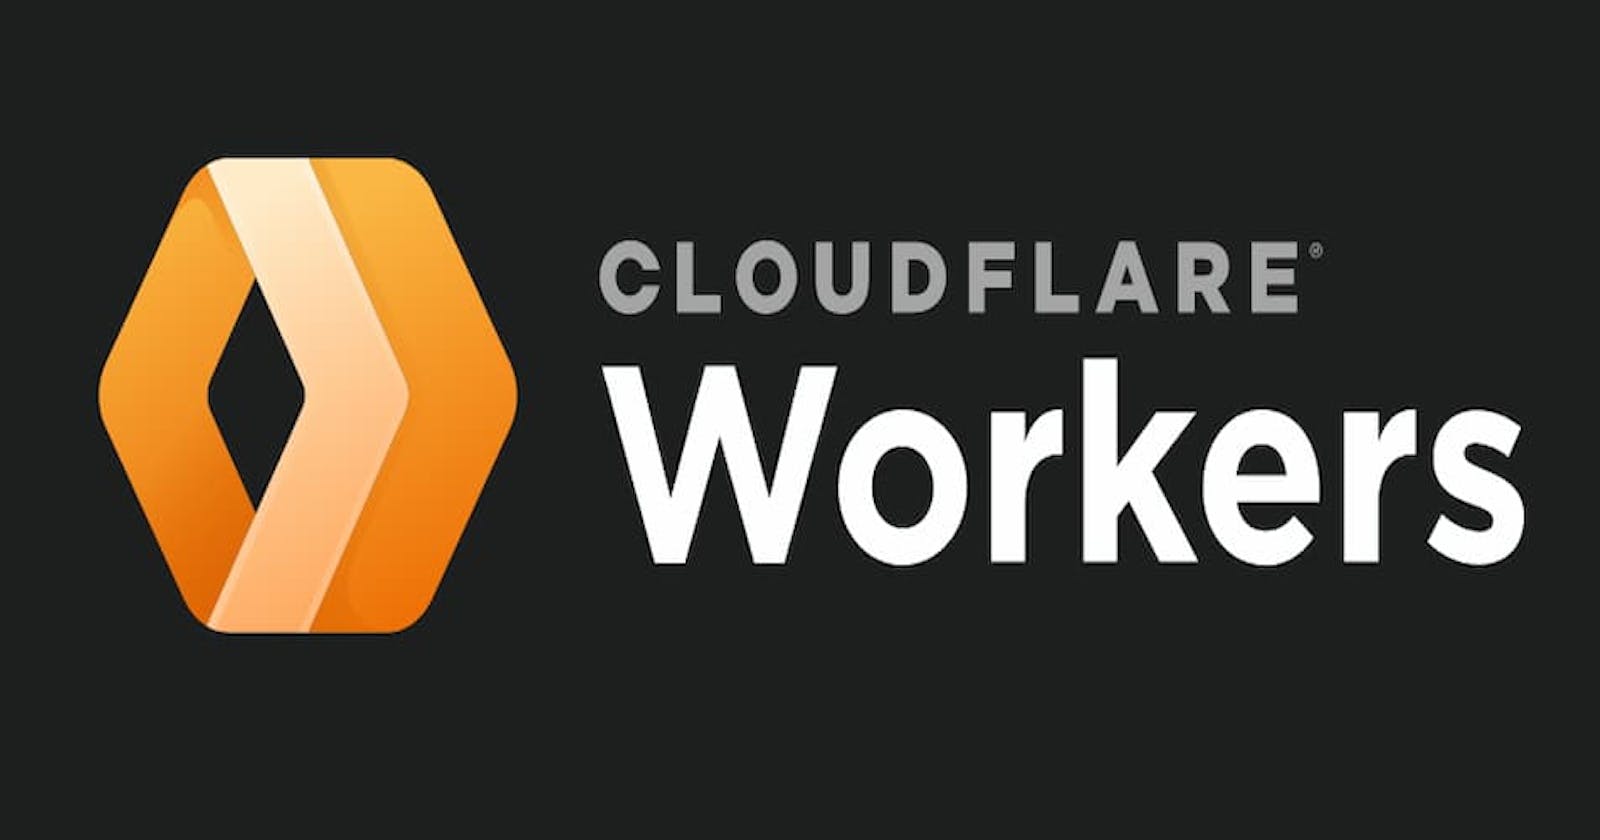 Running Cloudflare Workers (workerd) on Docker/Kubernetes